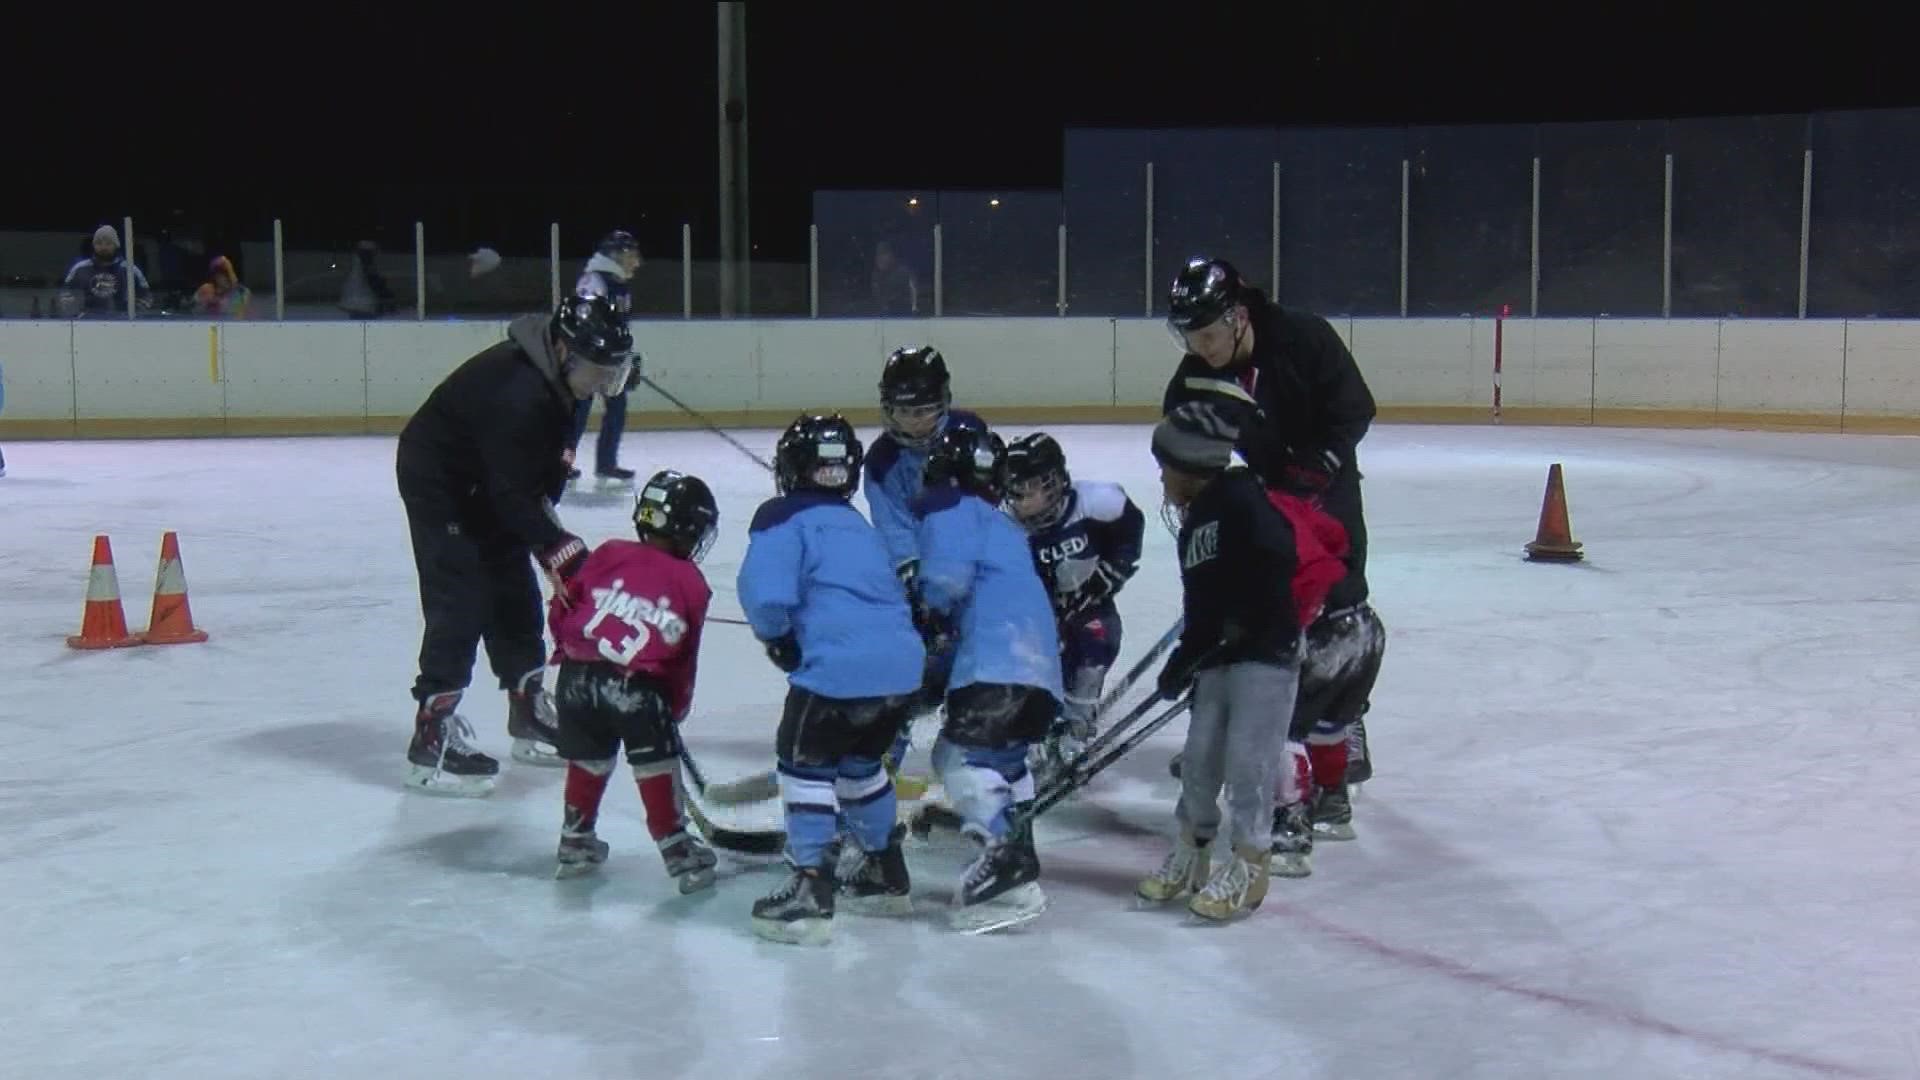 Popular program teaches kids how to skate, play hockey